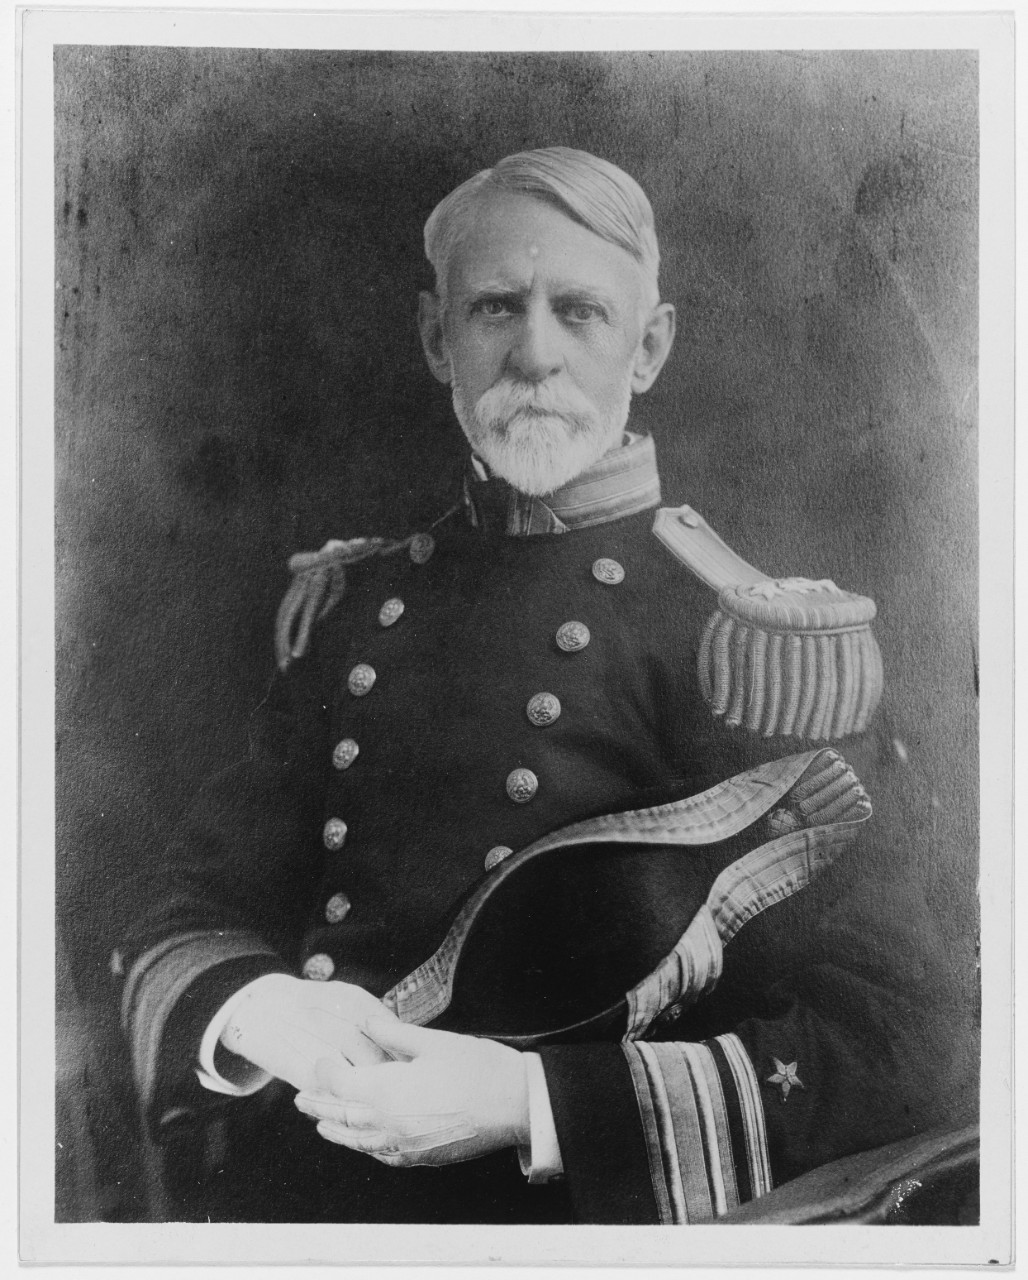 Rear Admiral George W. Sumner, USN